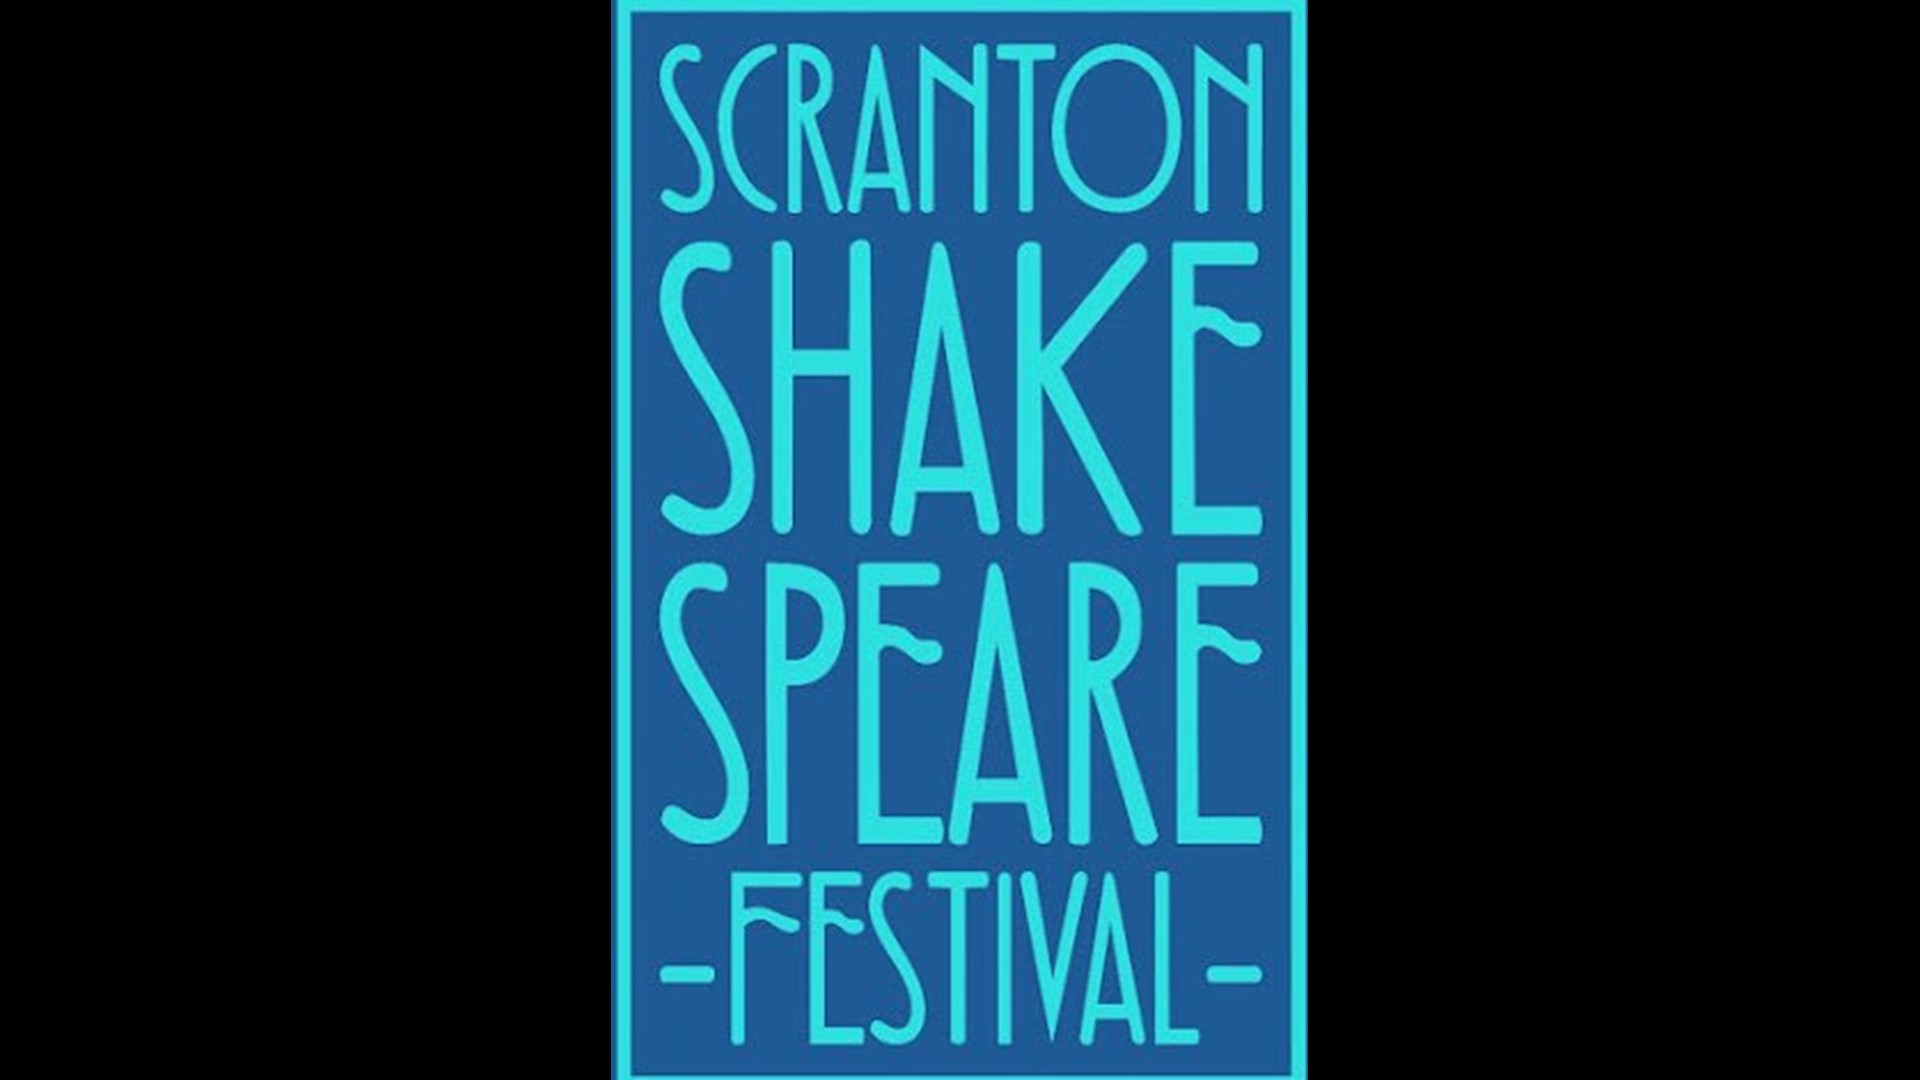 Scranton Shakespeare Festival